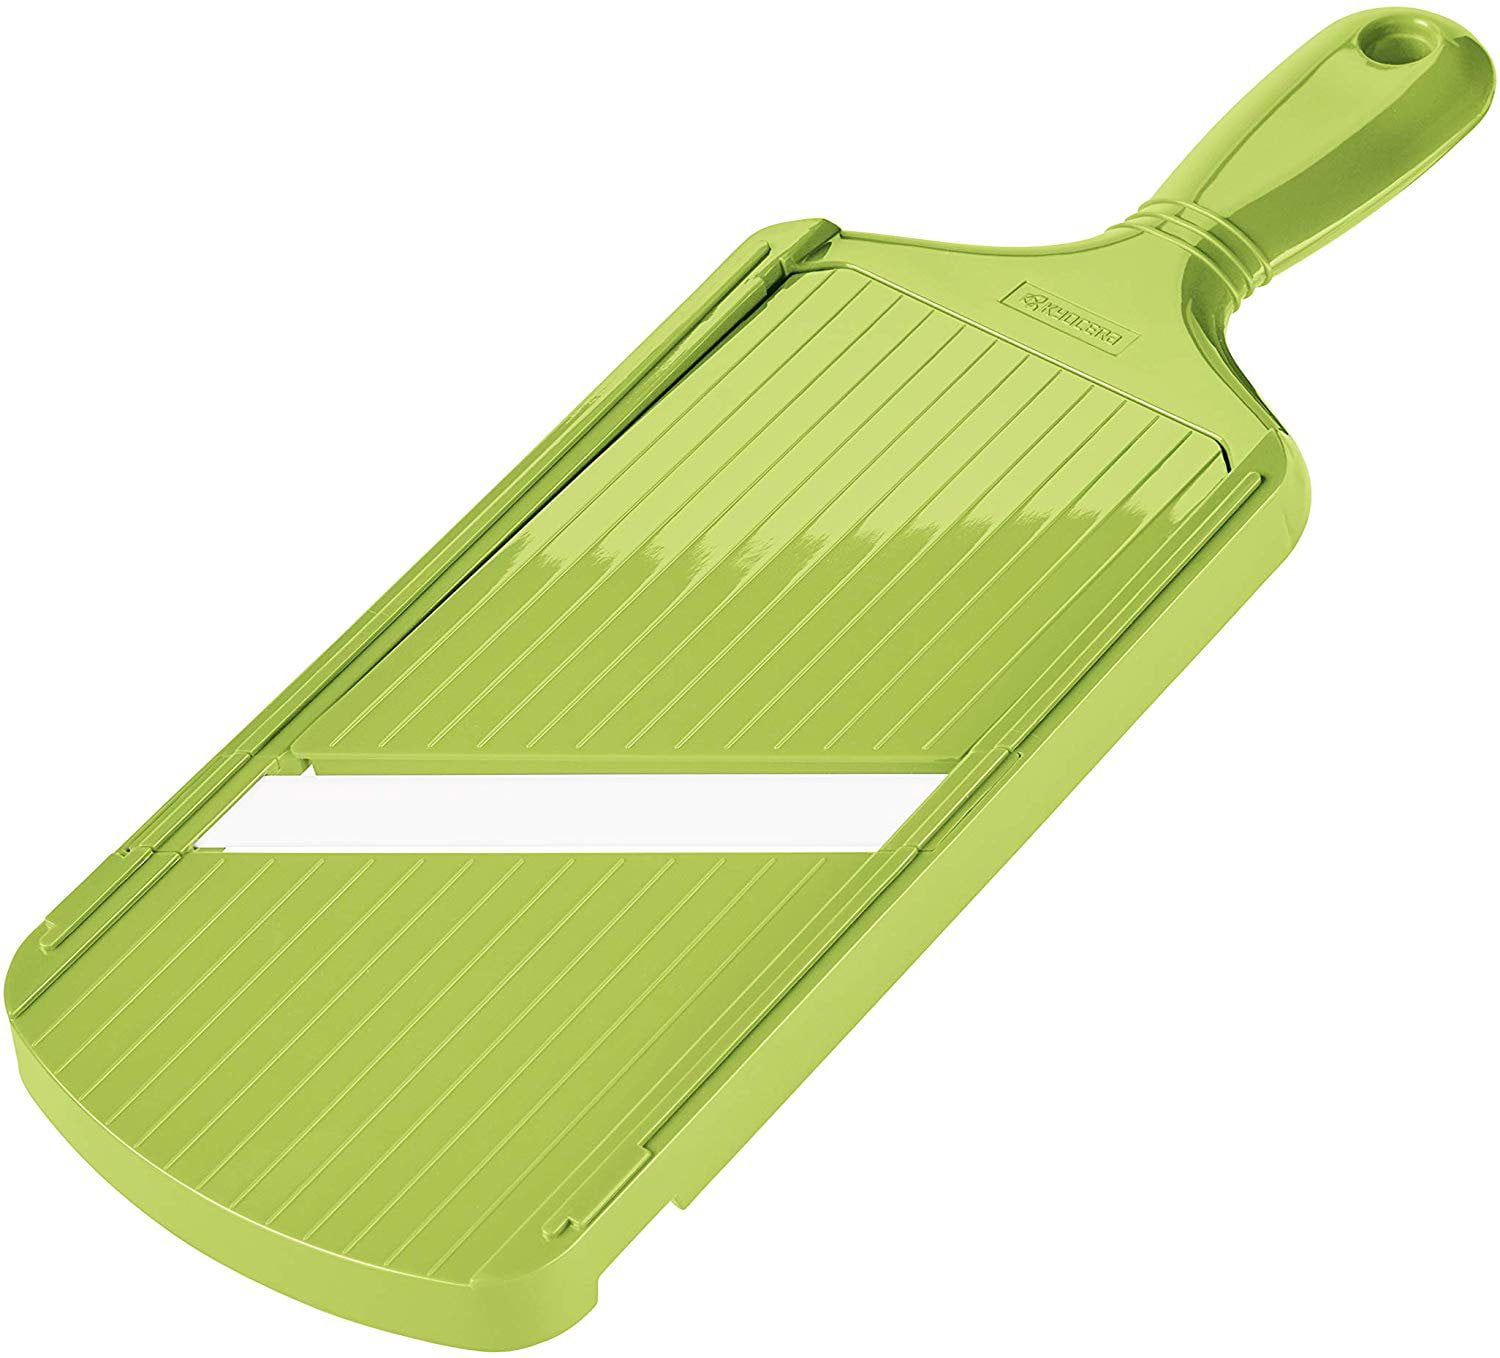 One Black Kyocera Soft Grip Kitchen Mandoline Slicer